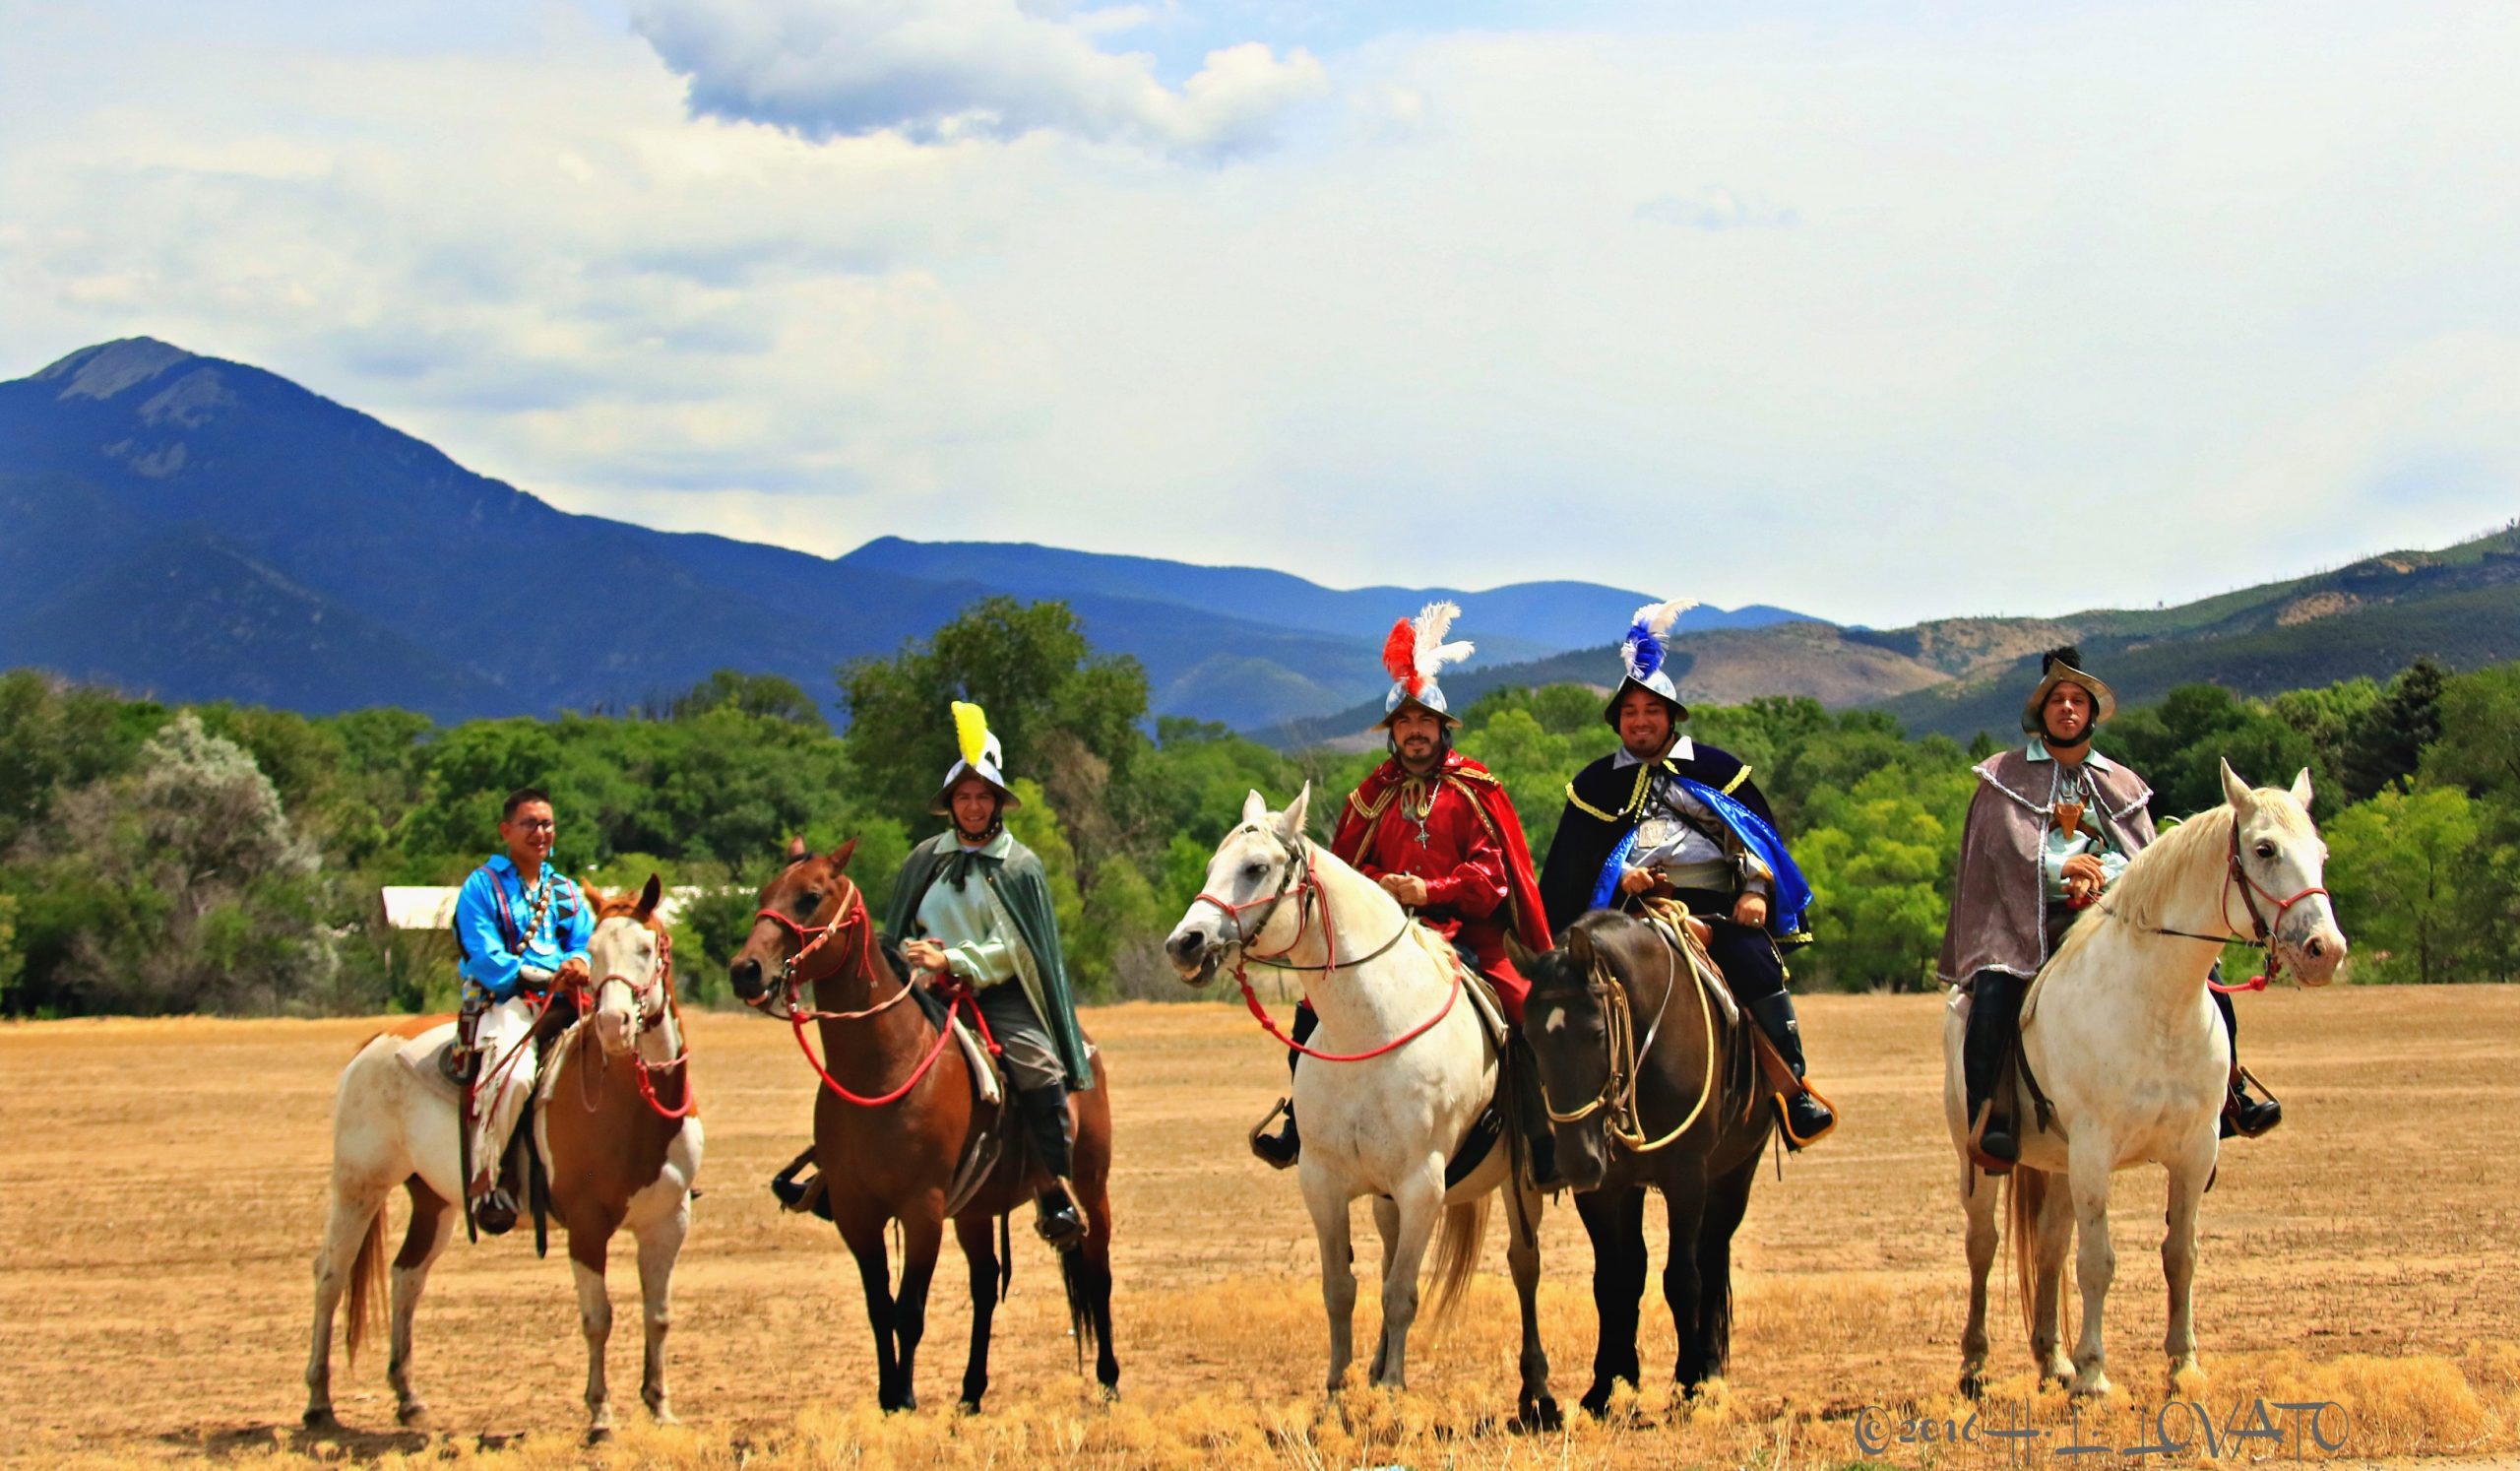 Men on horses dressed as conquistadors